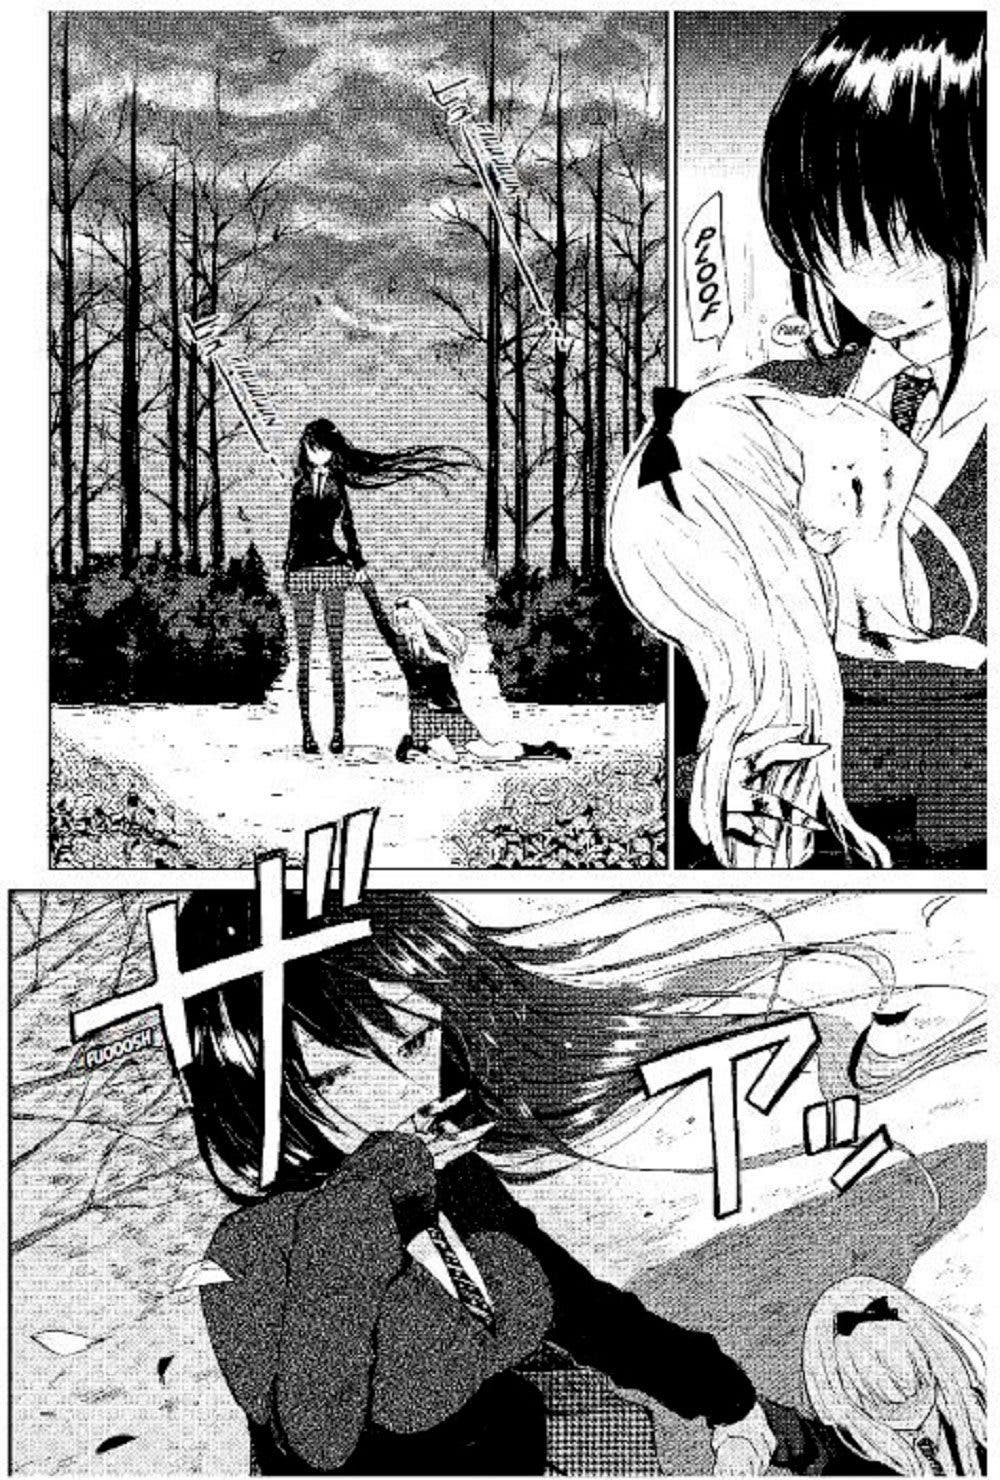 Yasuko mordiendo a una chica de su instituto